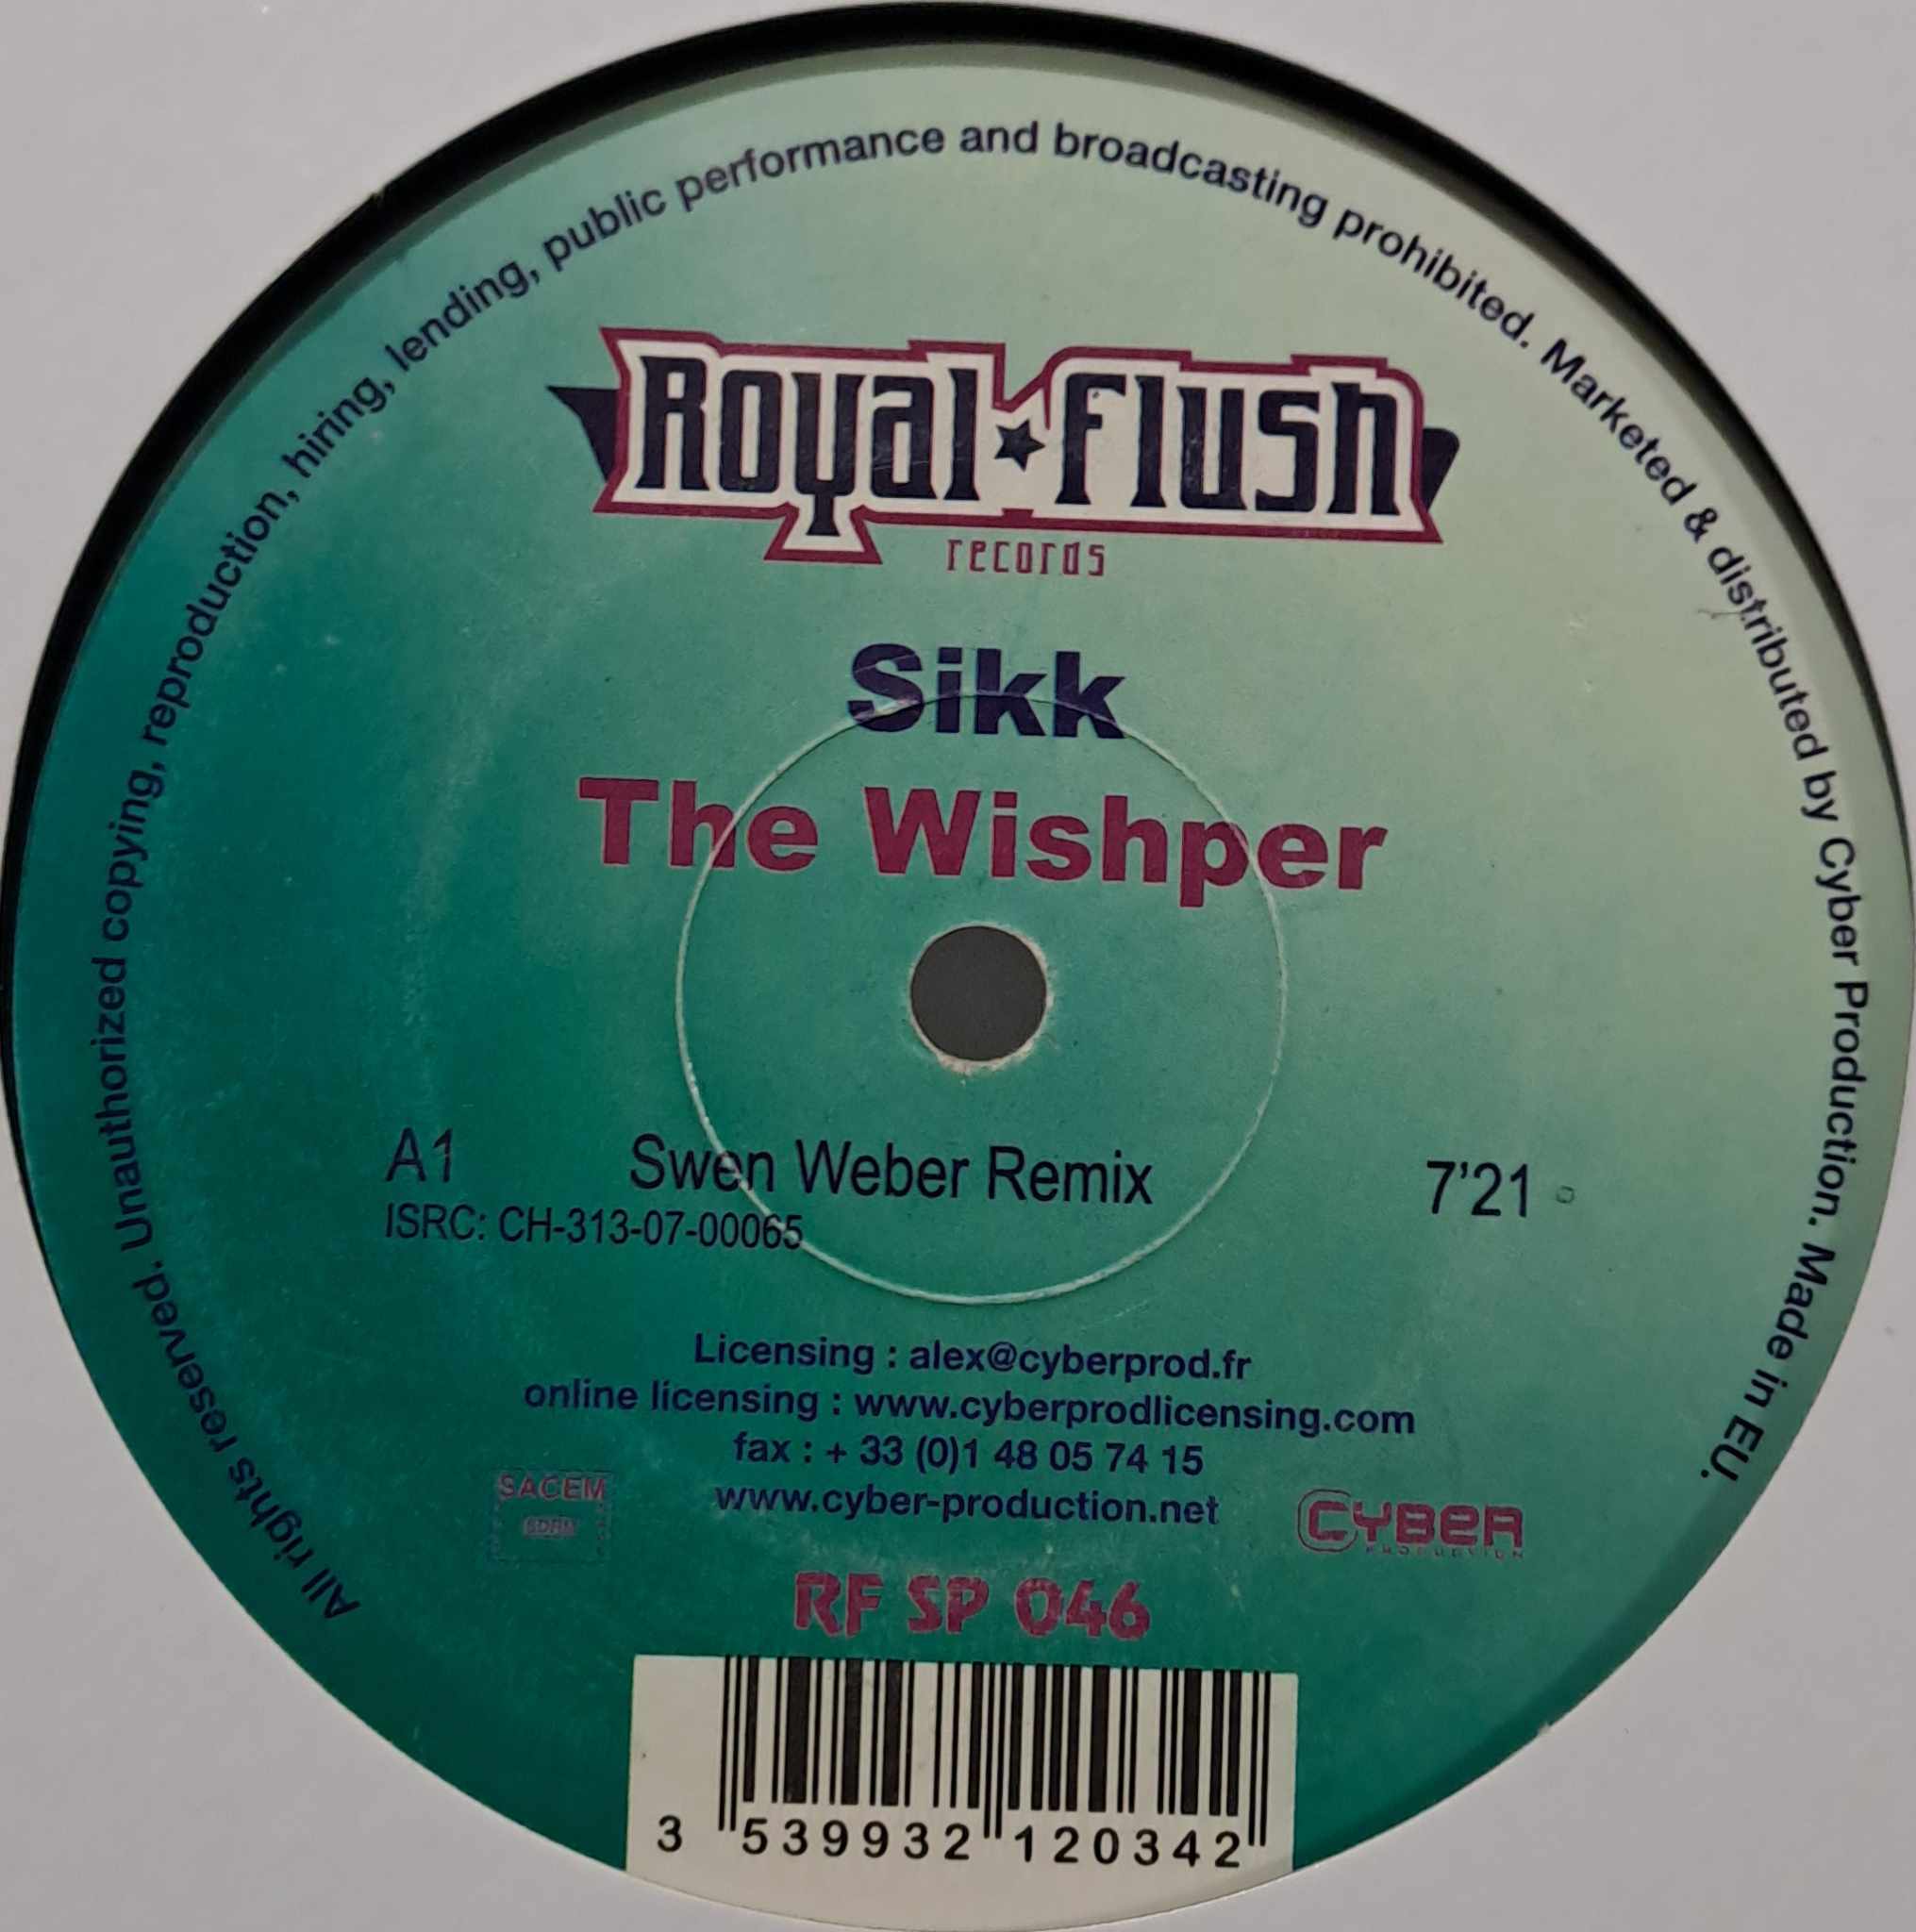 Royal Flush Records SP 046 - vinyle electro